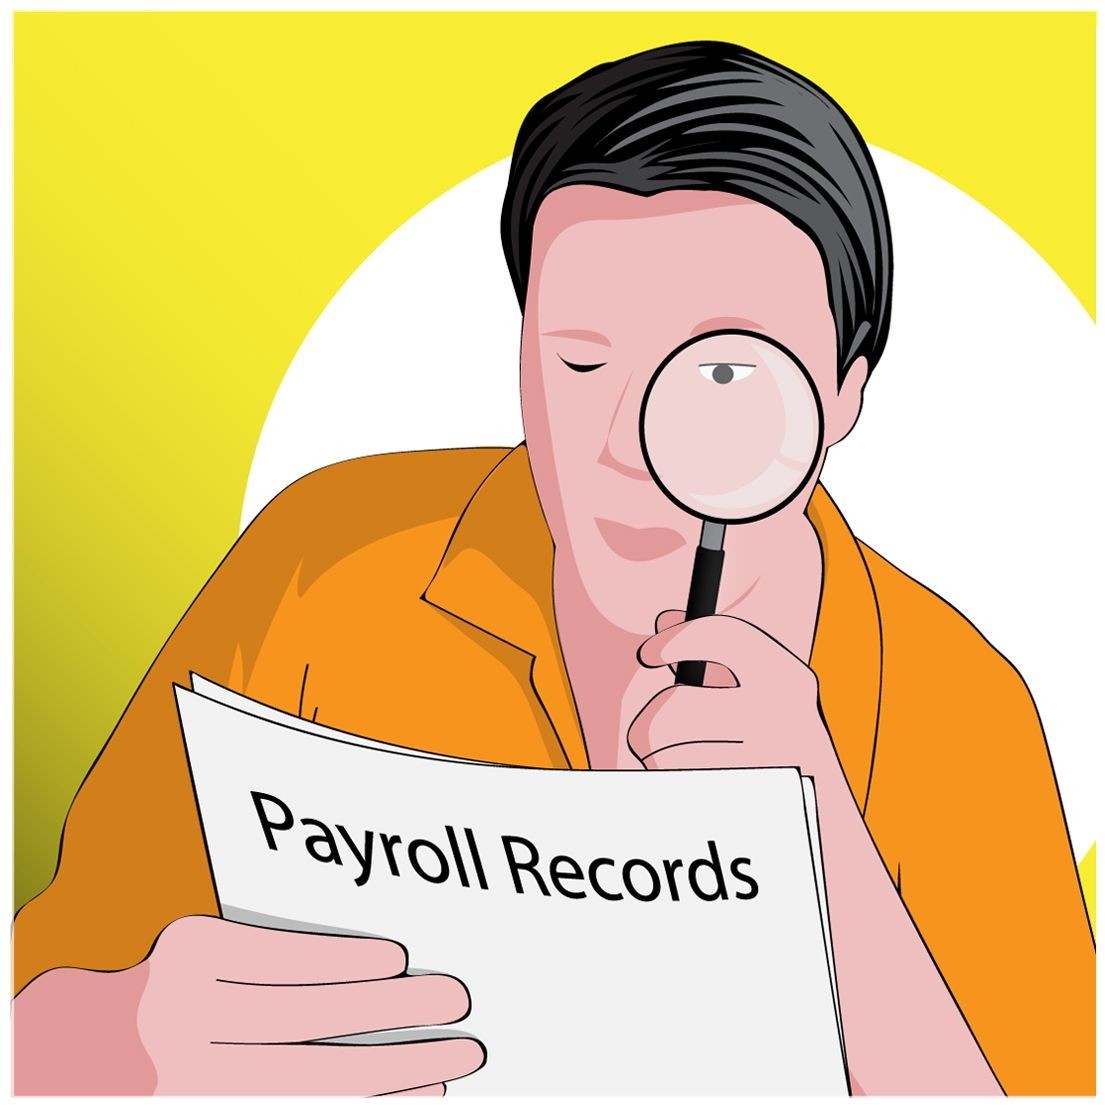 Payroll Fraud